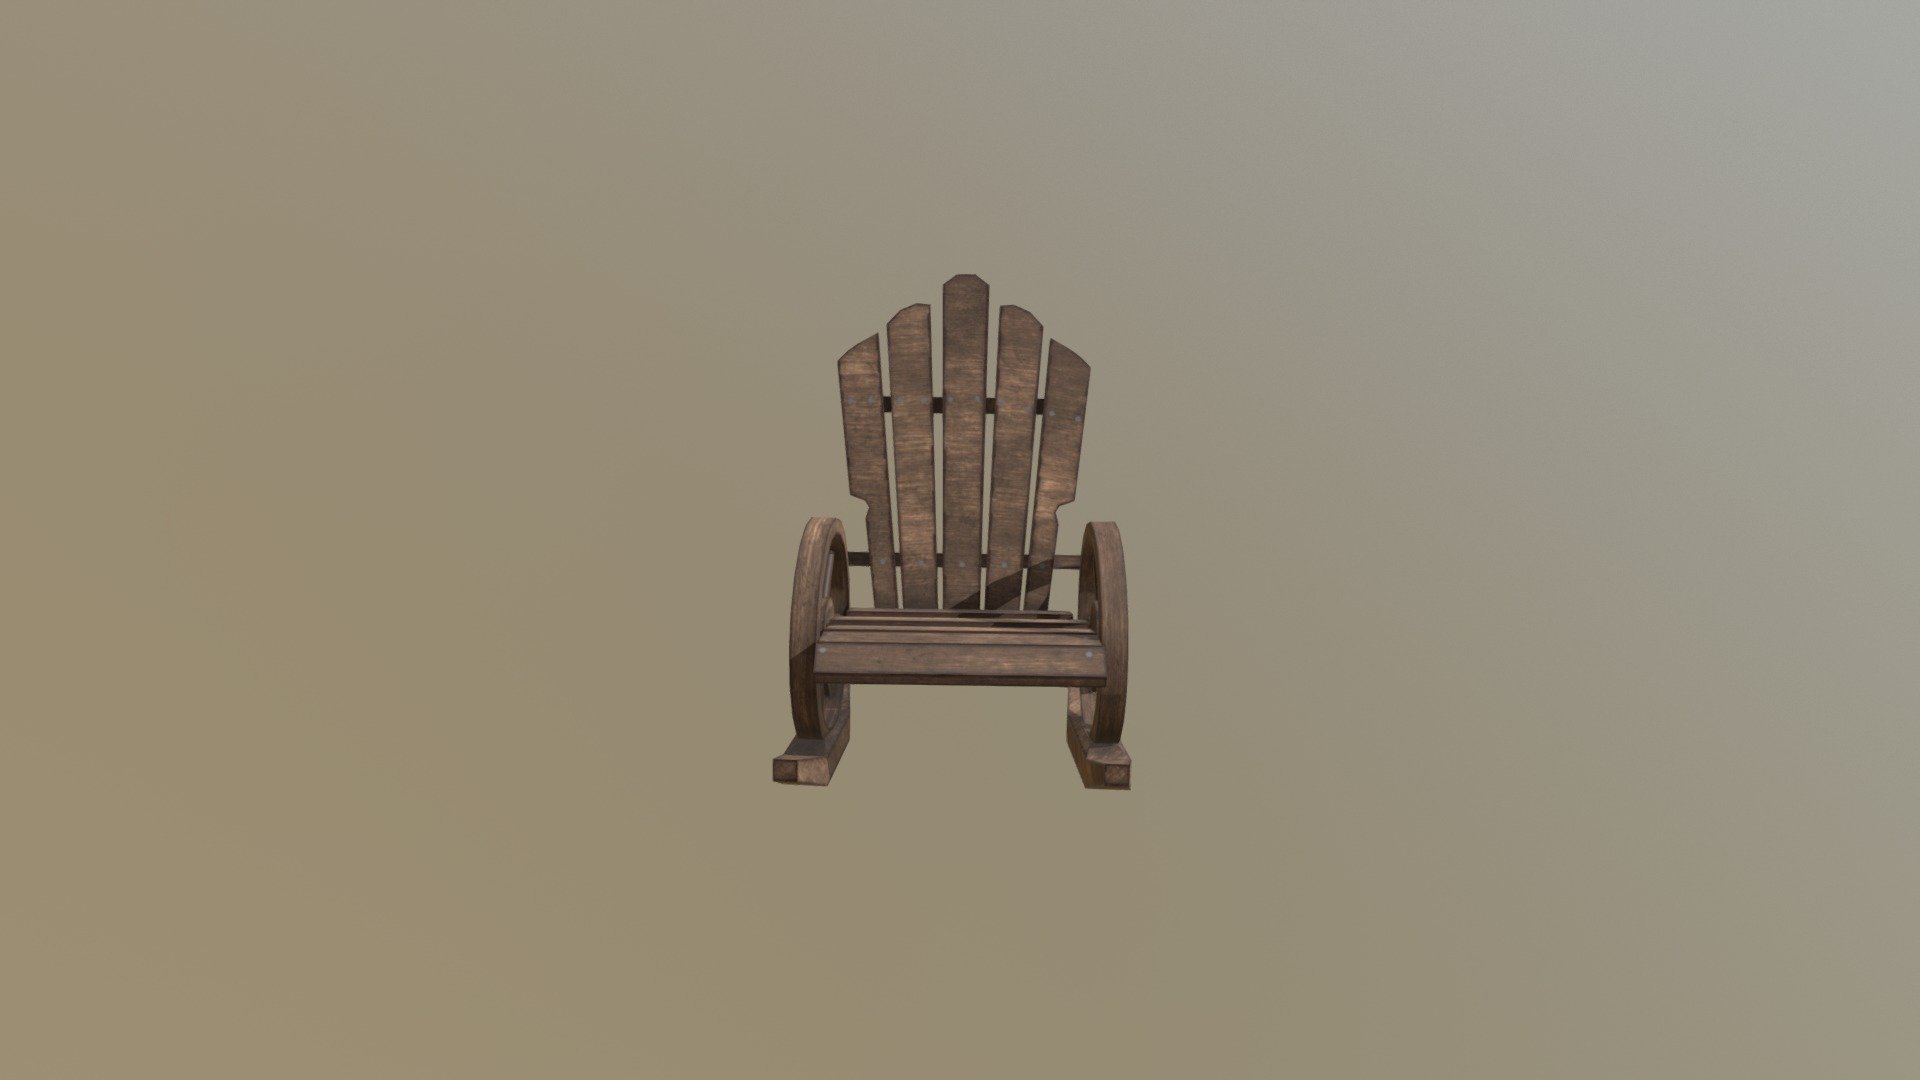 Rocking Chair Animation